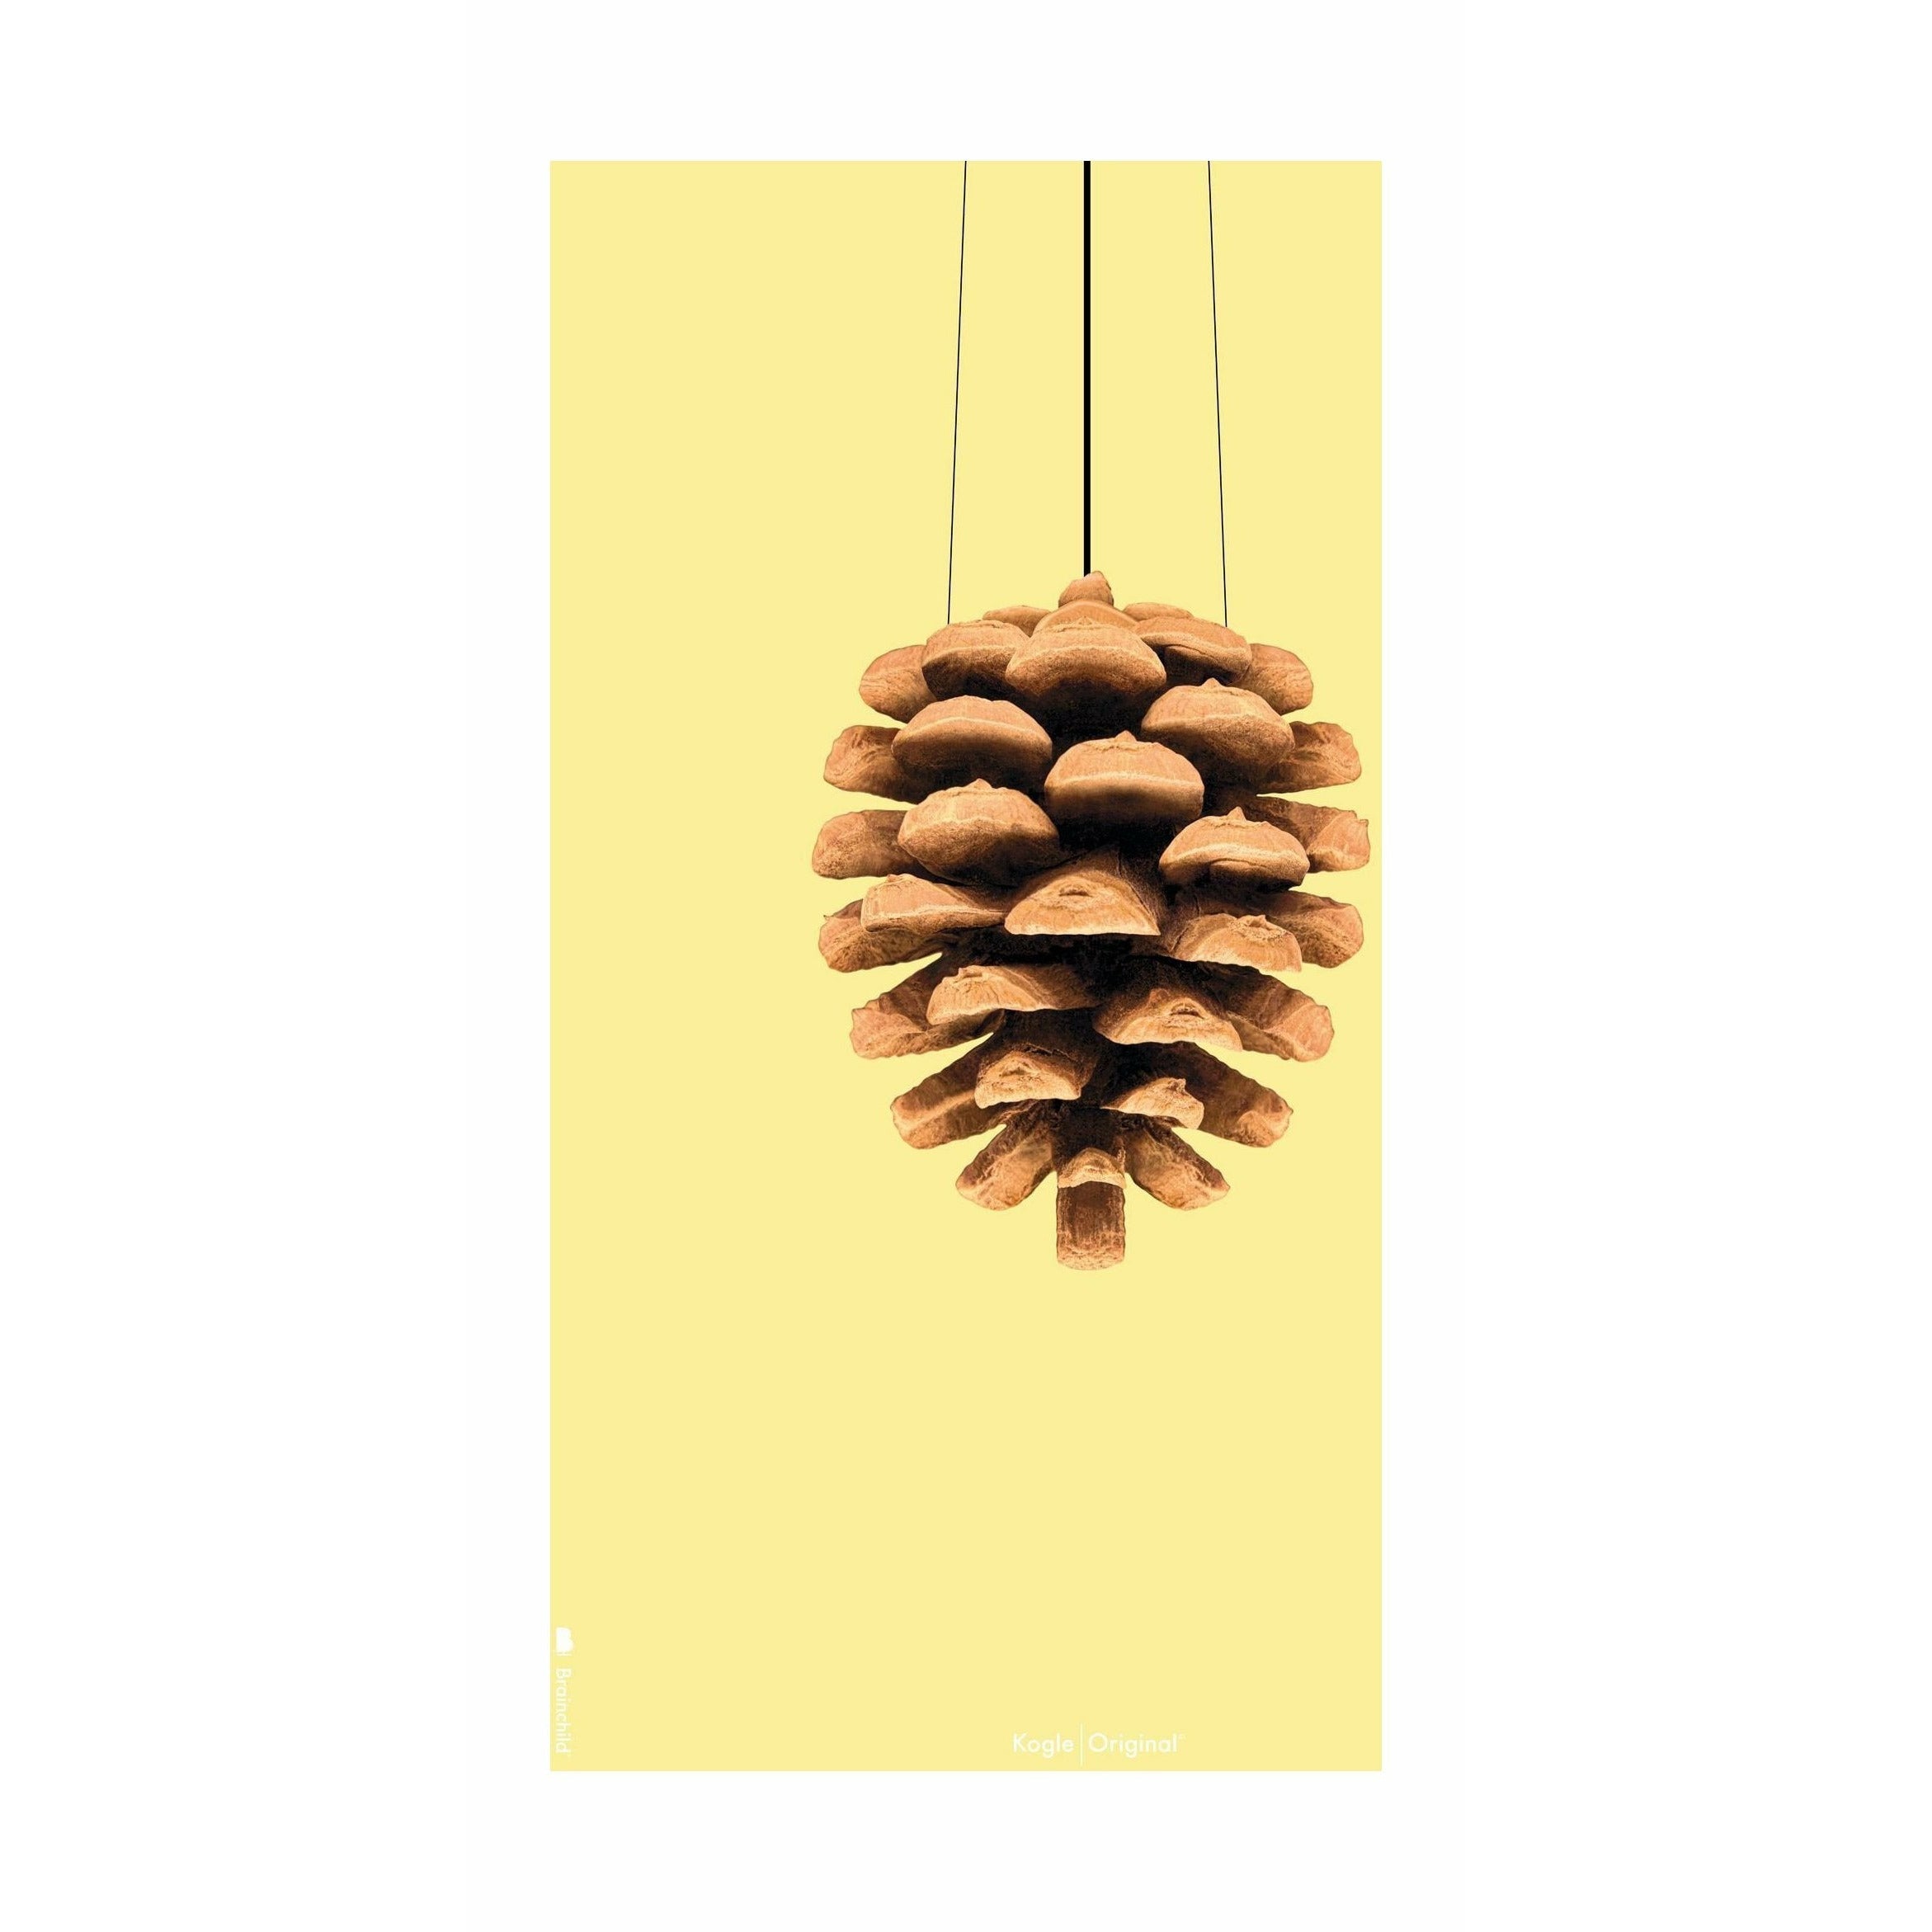 Brainchild Pine Cone Classic Poster uten ramme A5, gul bakgrunn